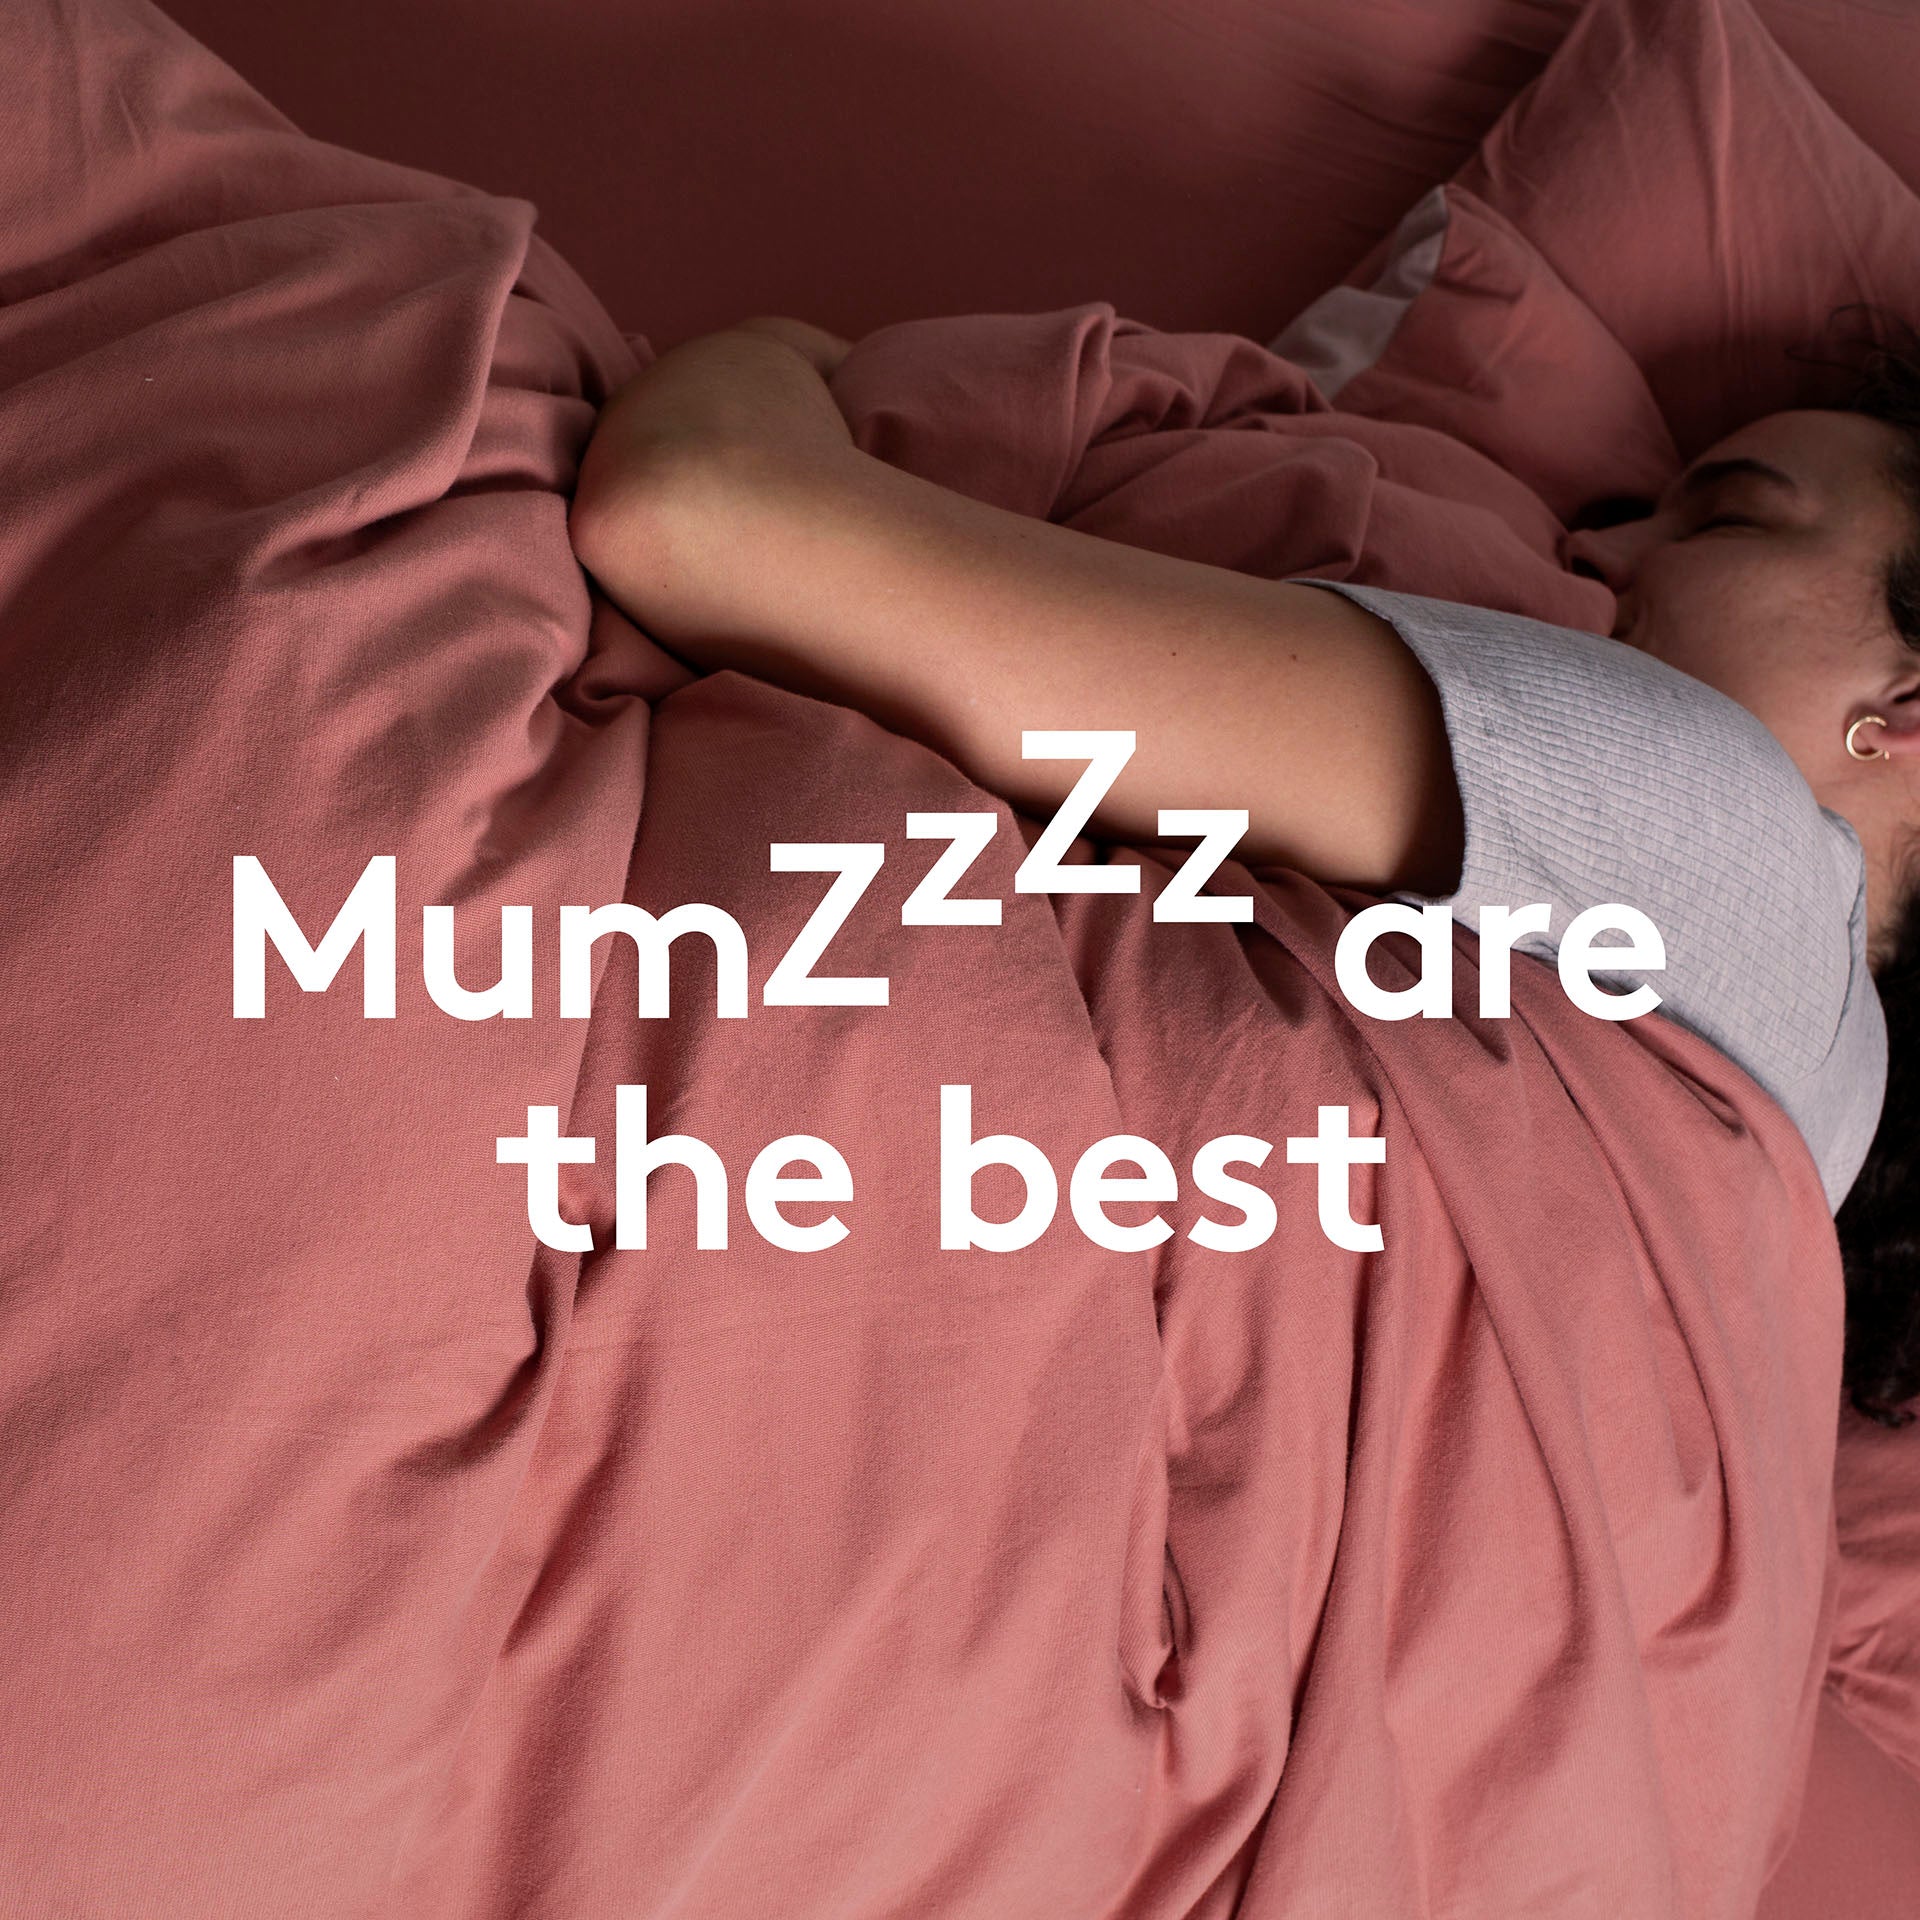 Every mum deserves the best sleep! 💤